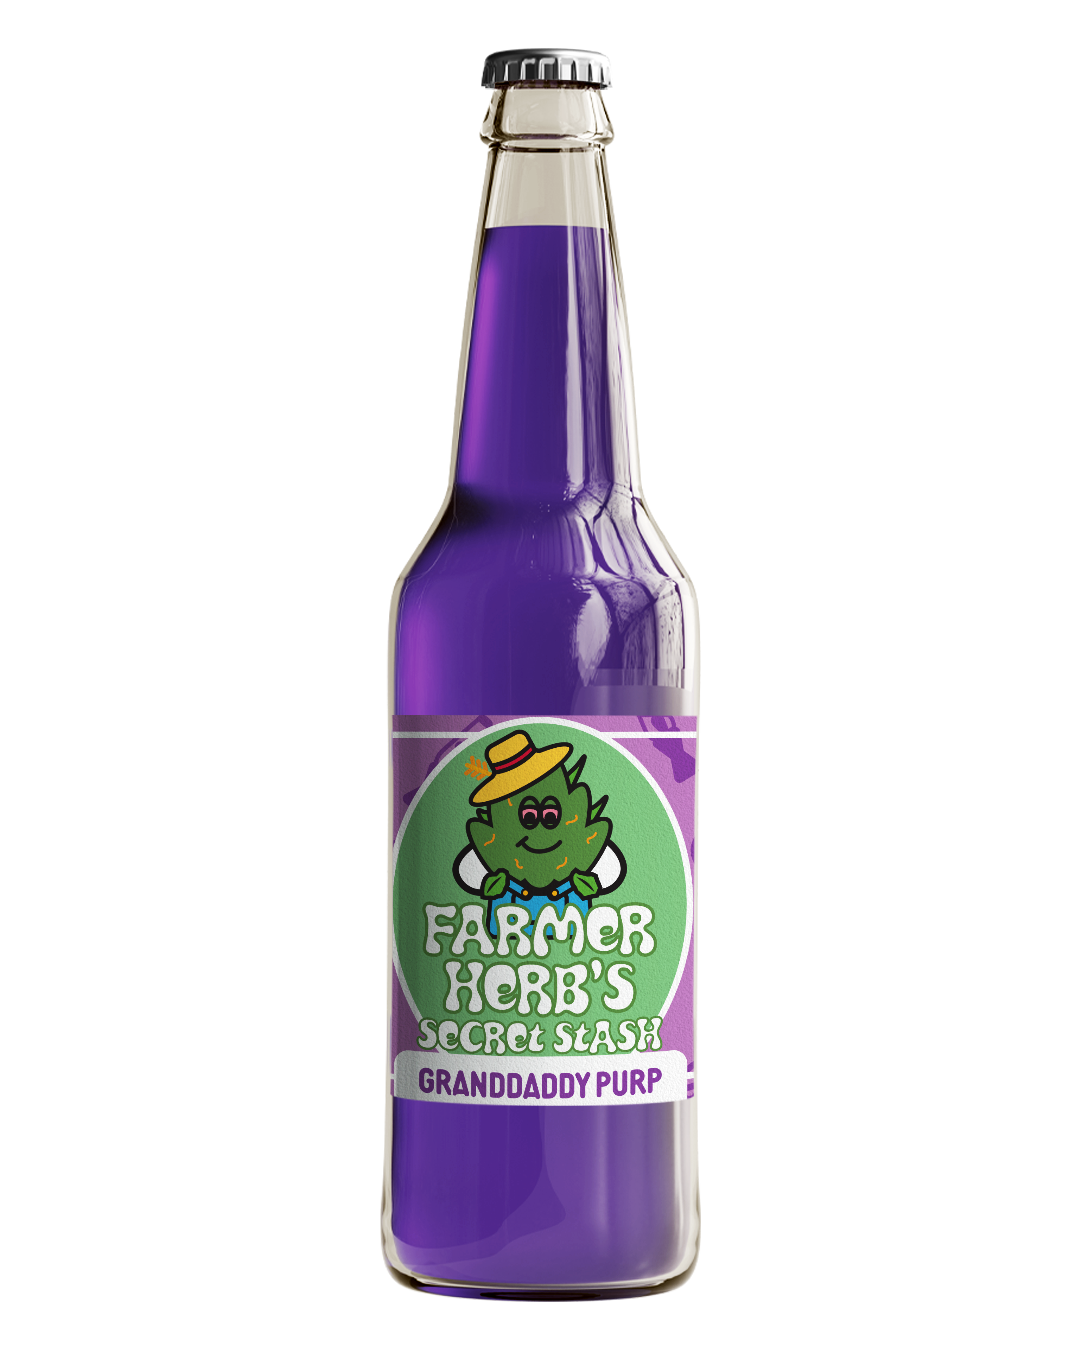 A bottle of Farmer Herb's Secret Stash Grandaddy Purp Cane Sugar Soda